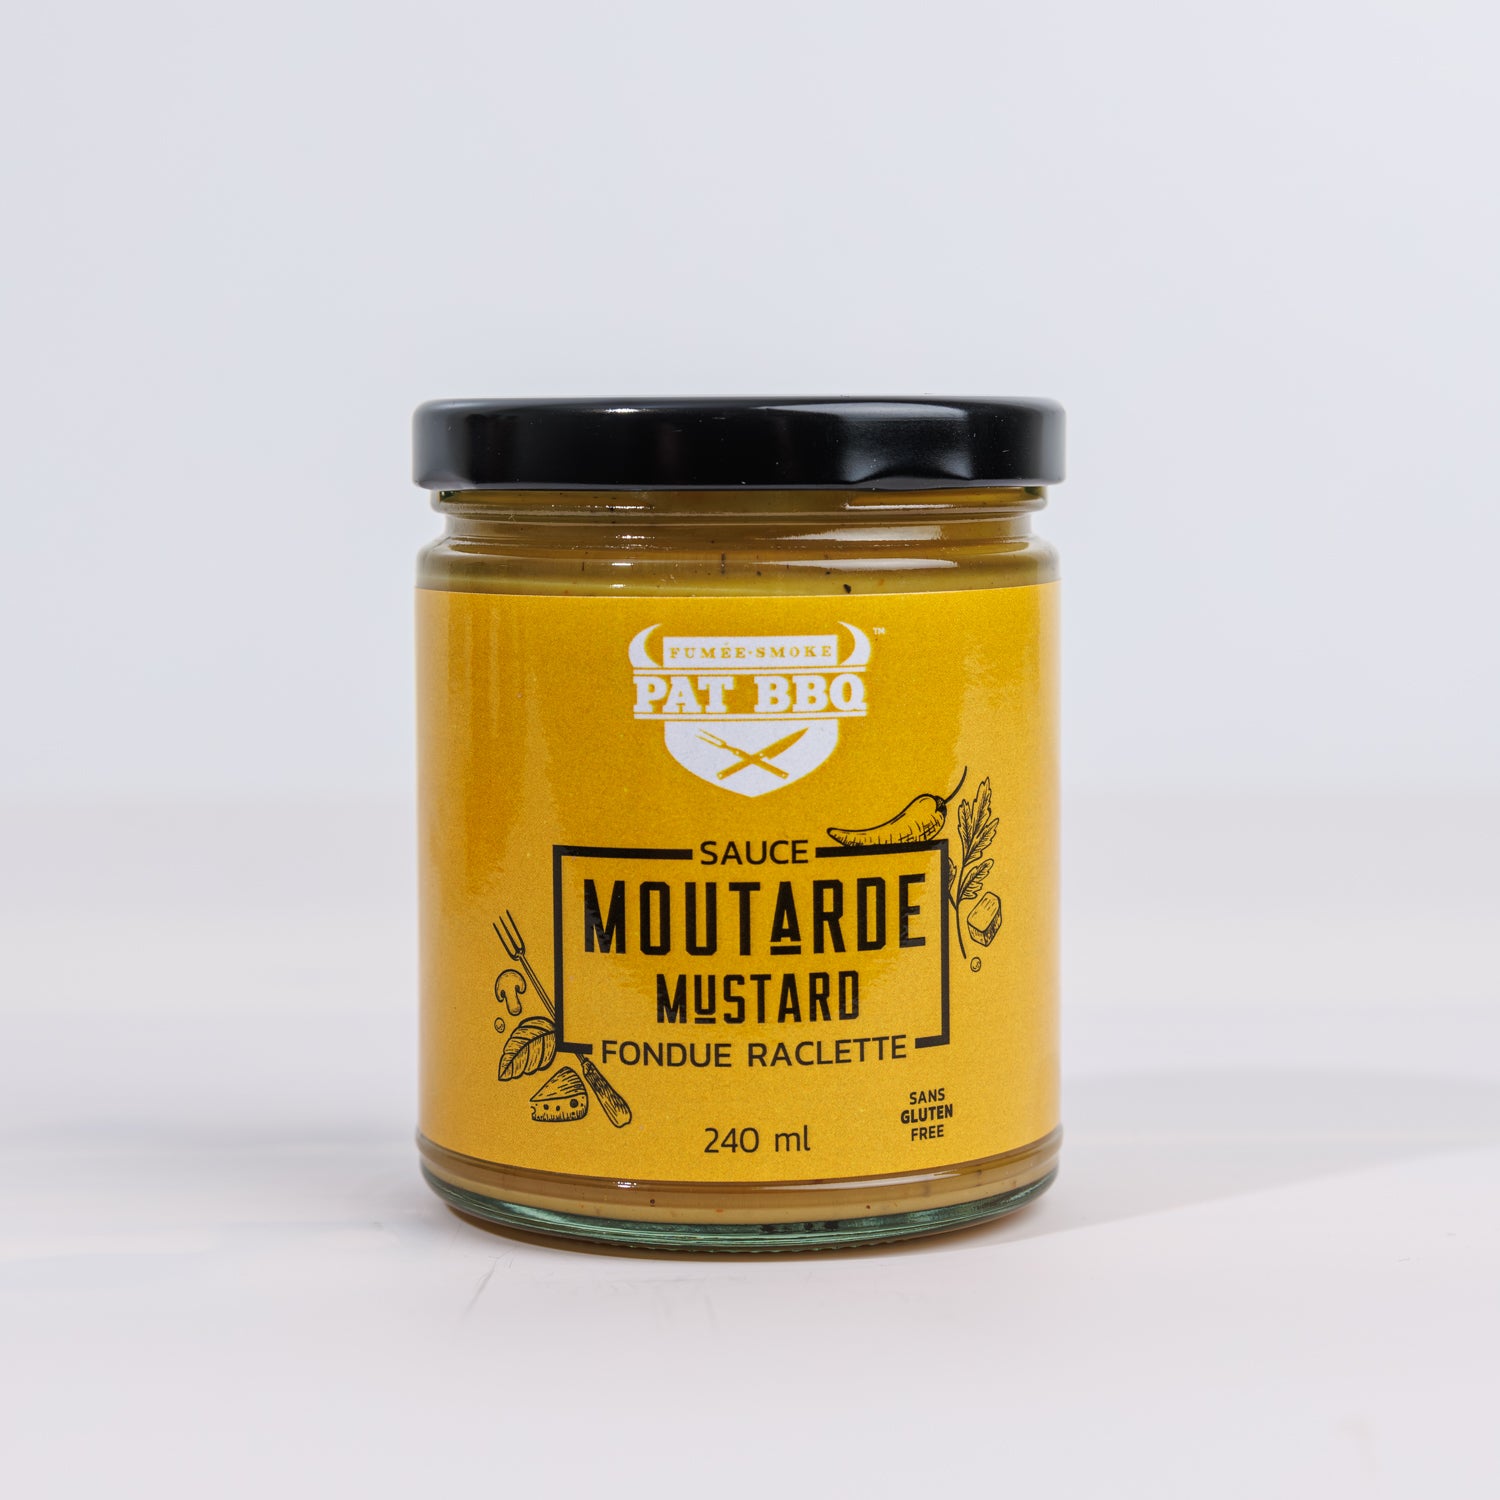 Sauce moutarde - PatBBQ